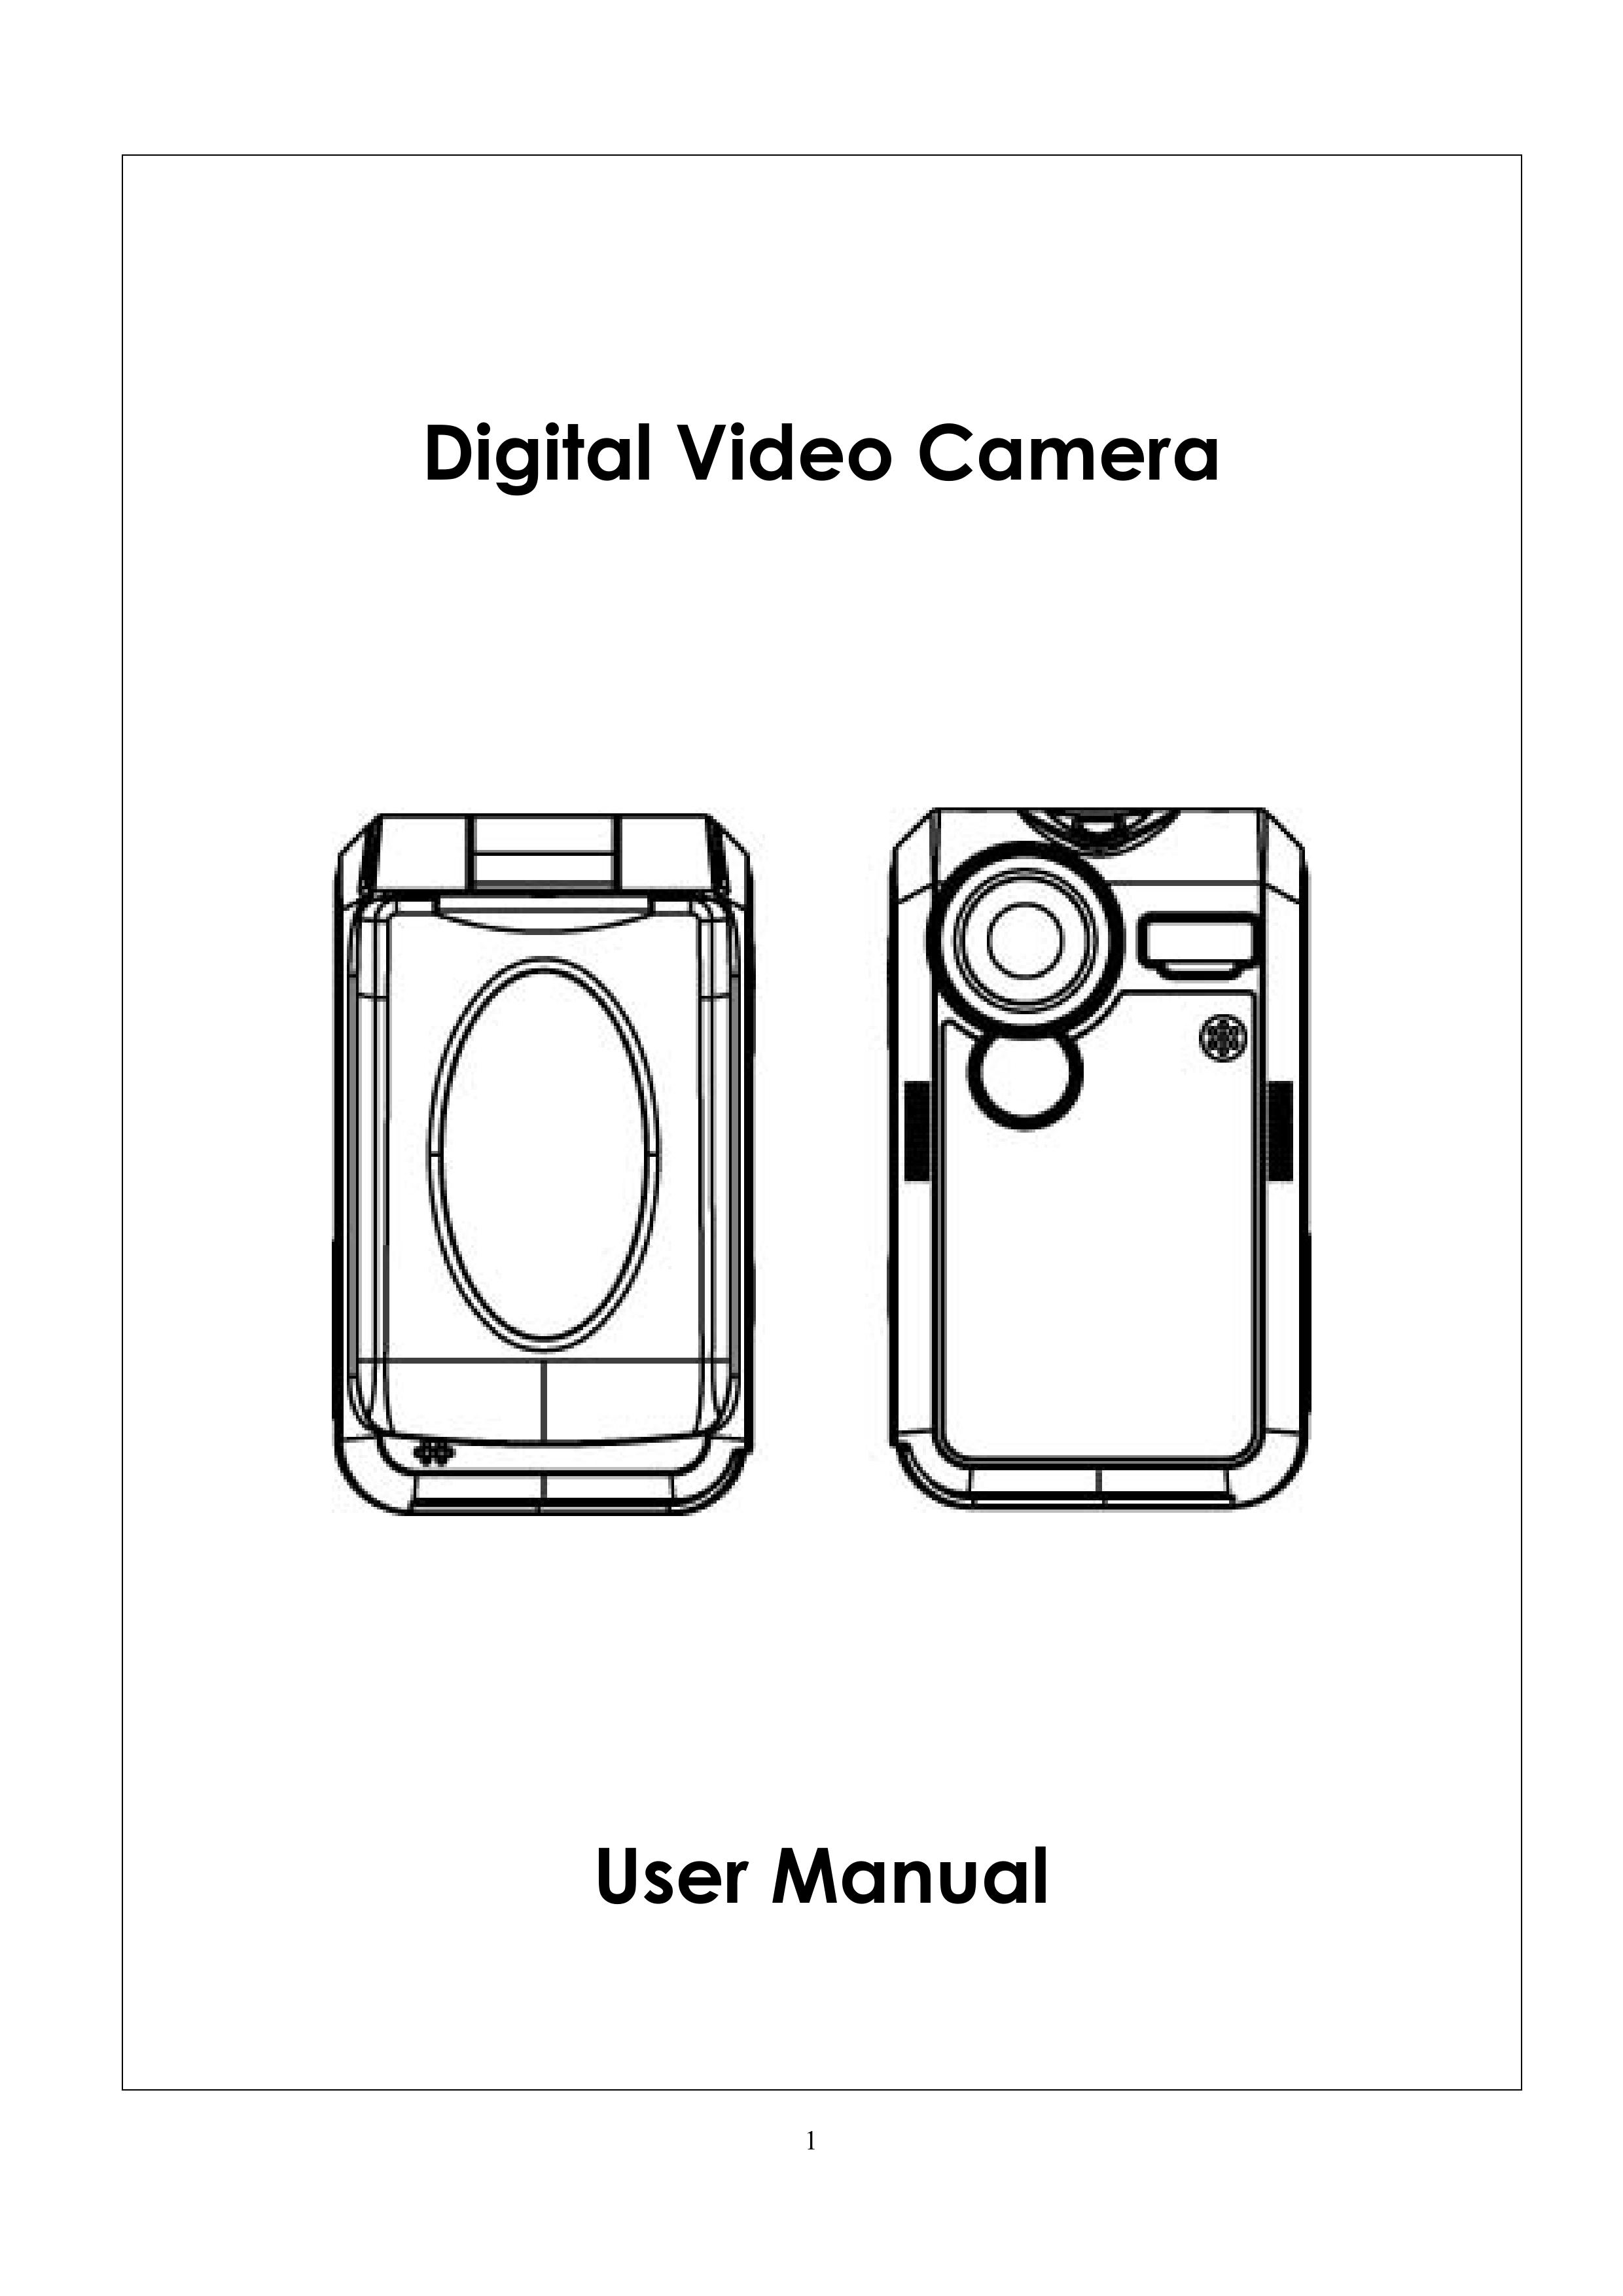 Ulead Digital Video Camera Digital Camera User Manual